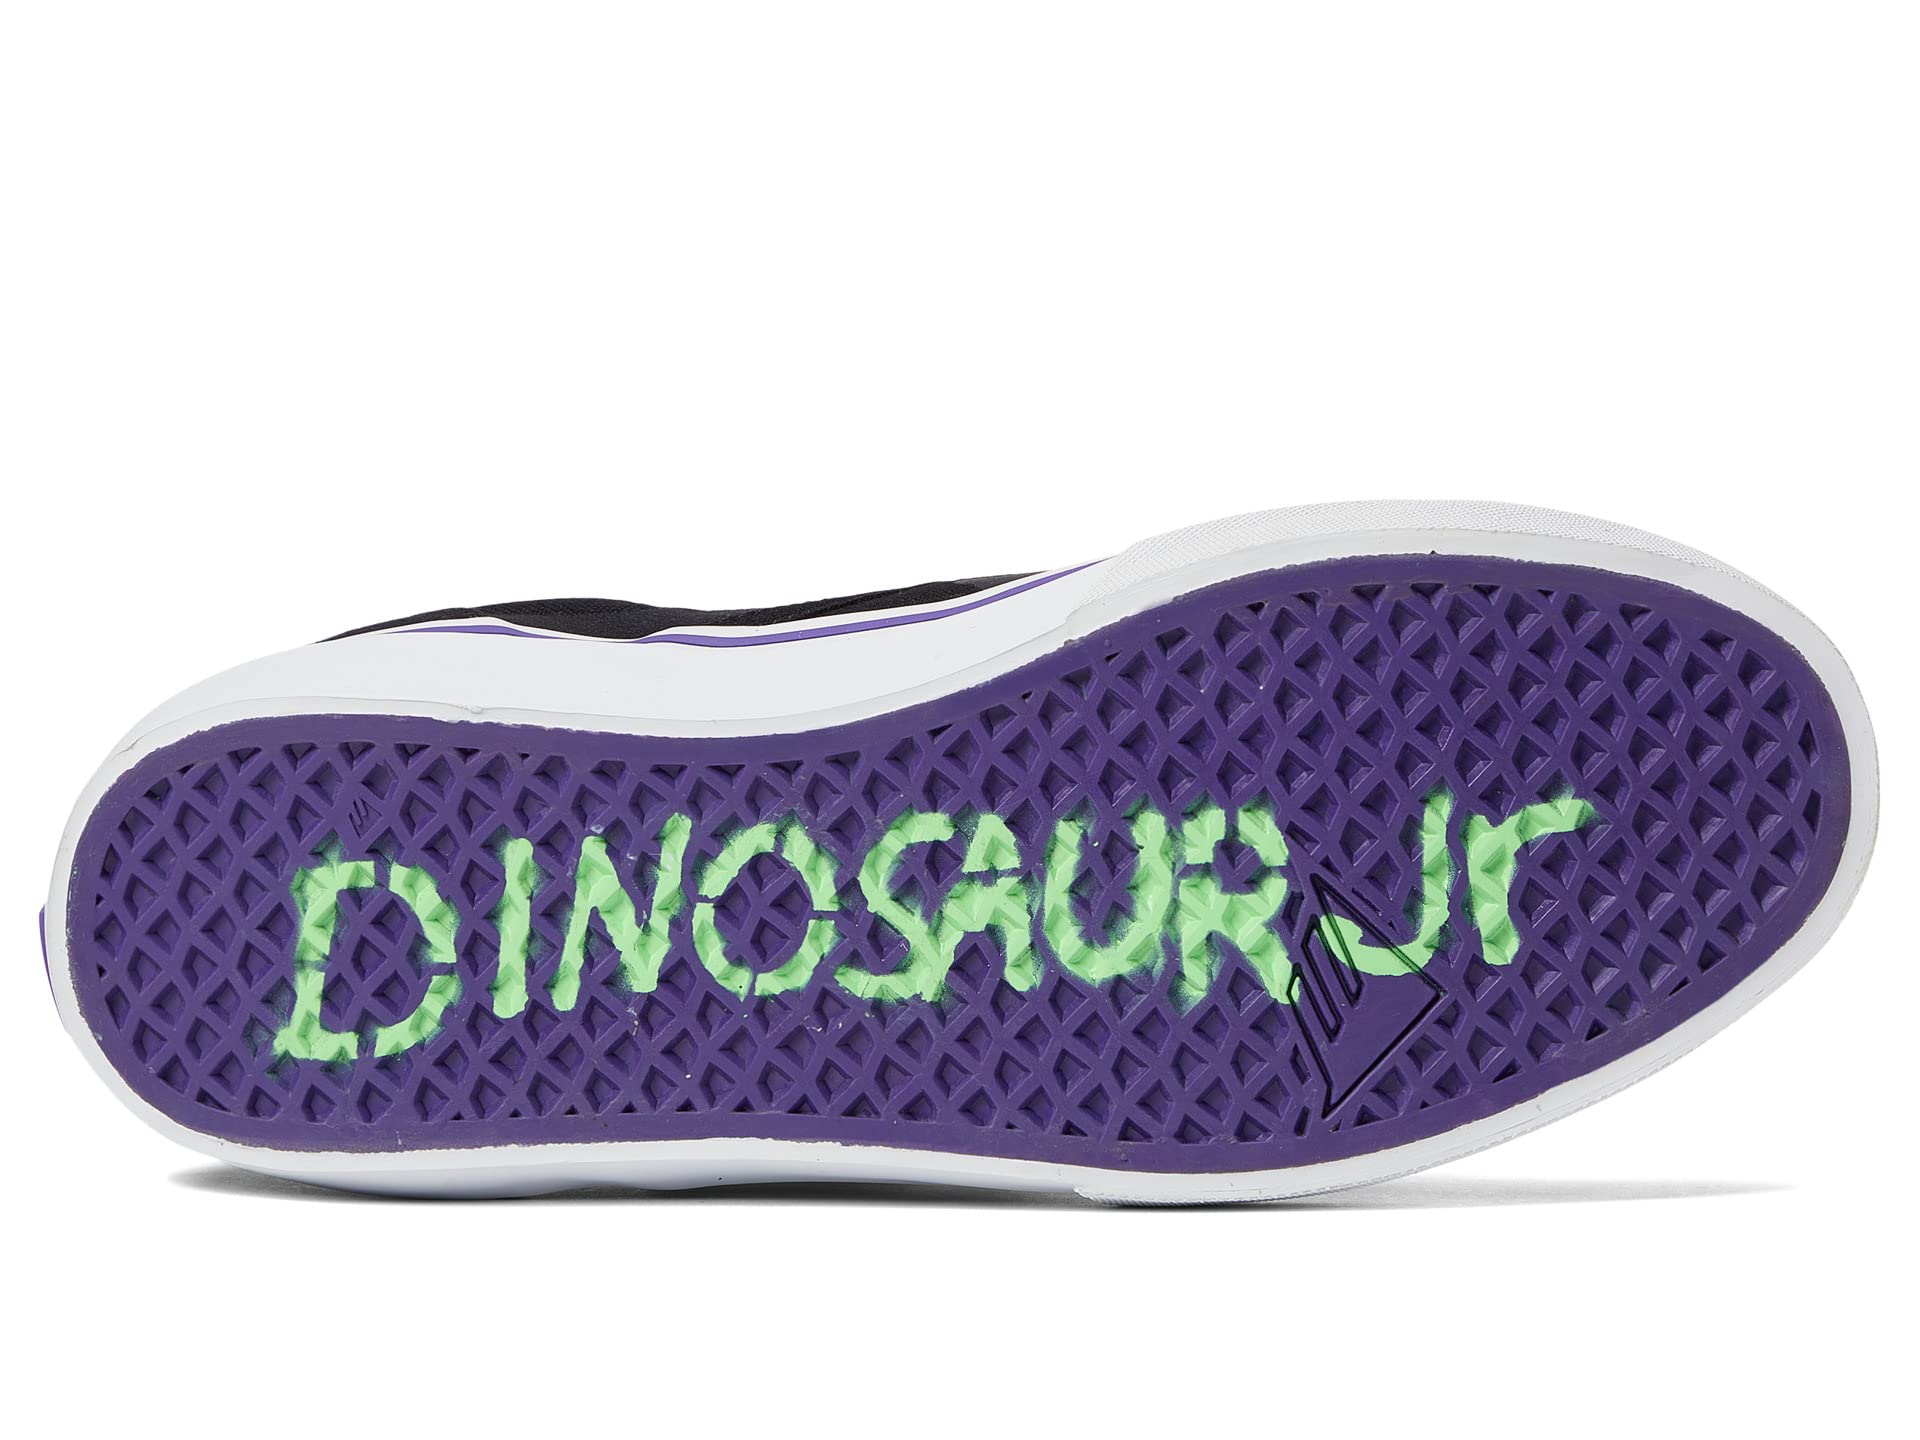 Dinosaur jr emerica